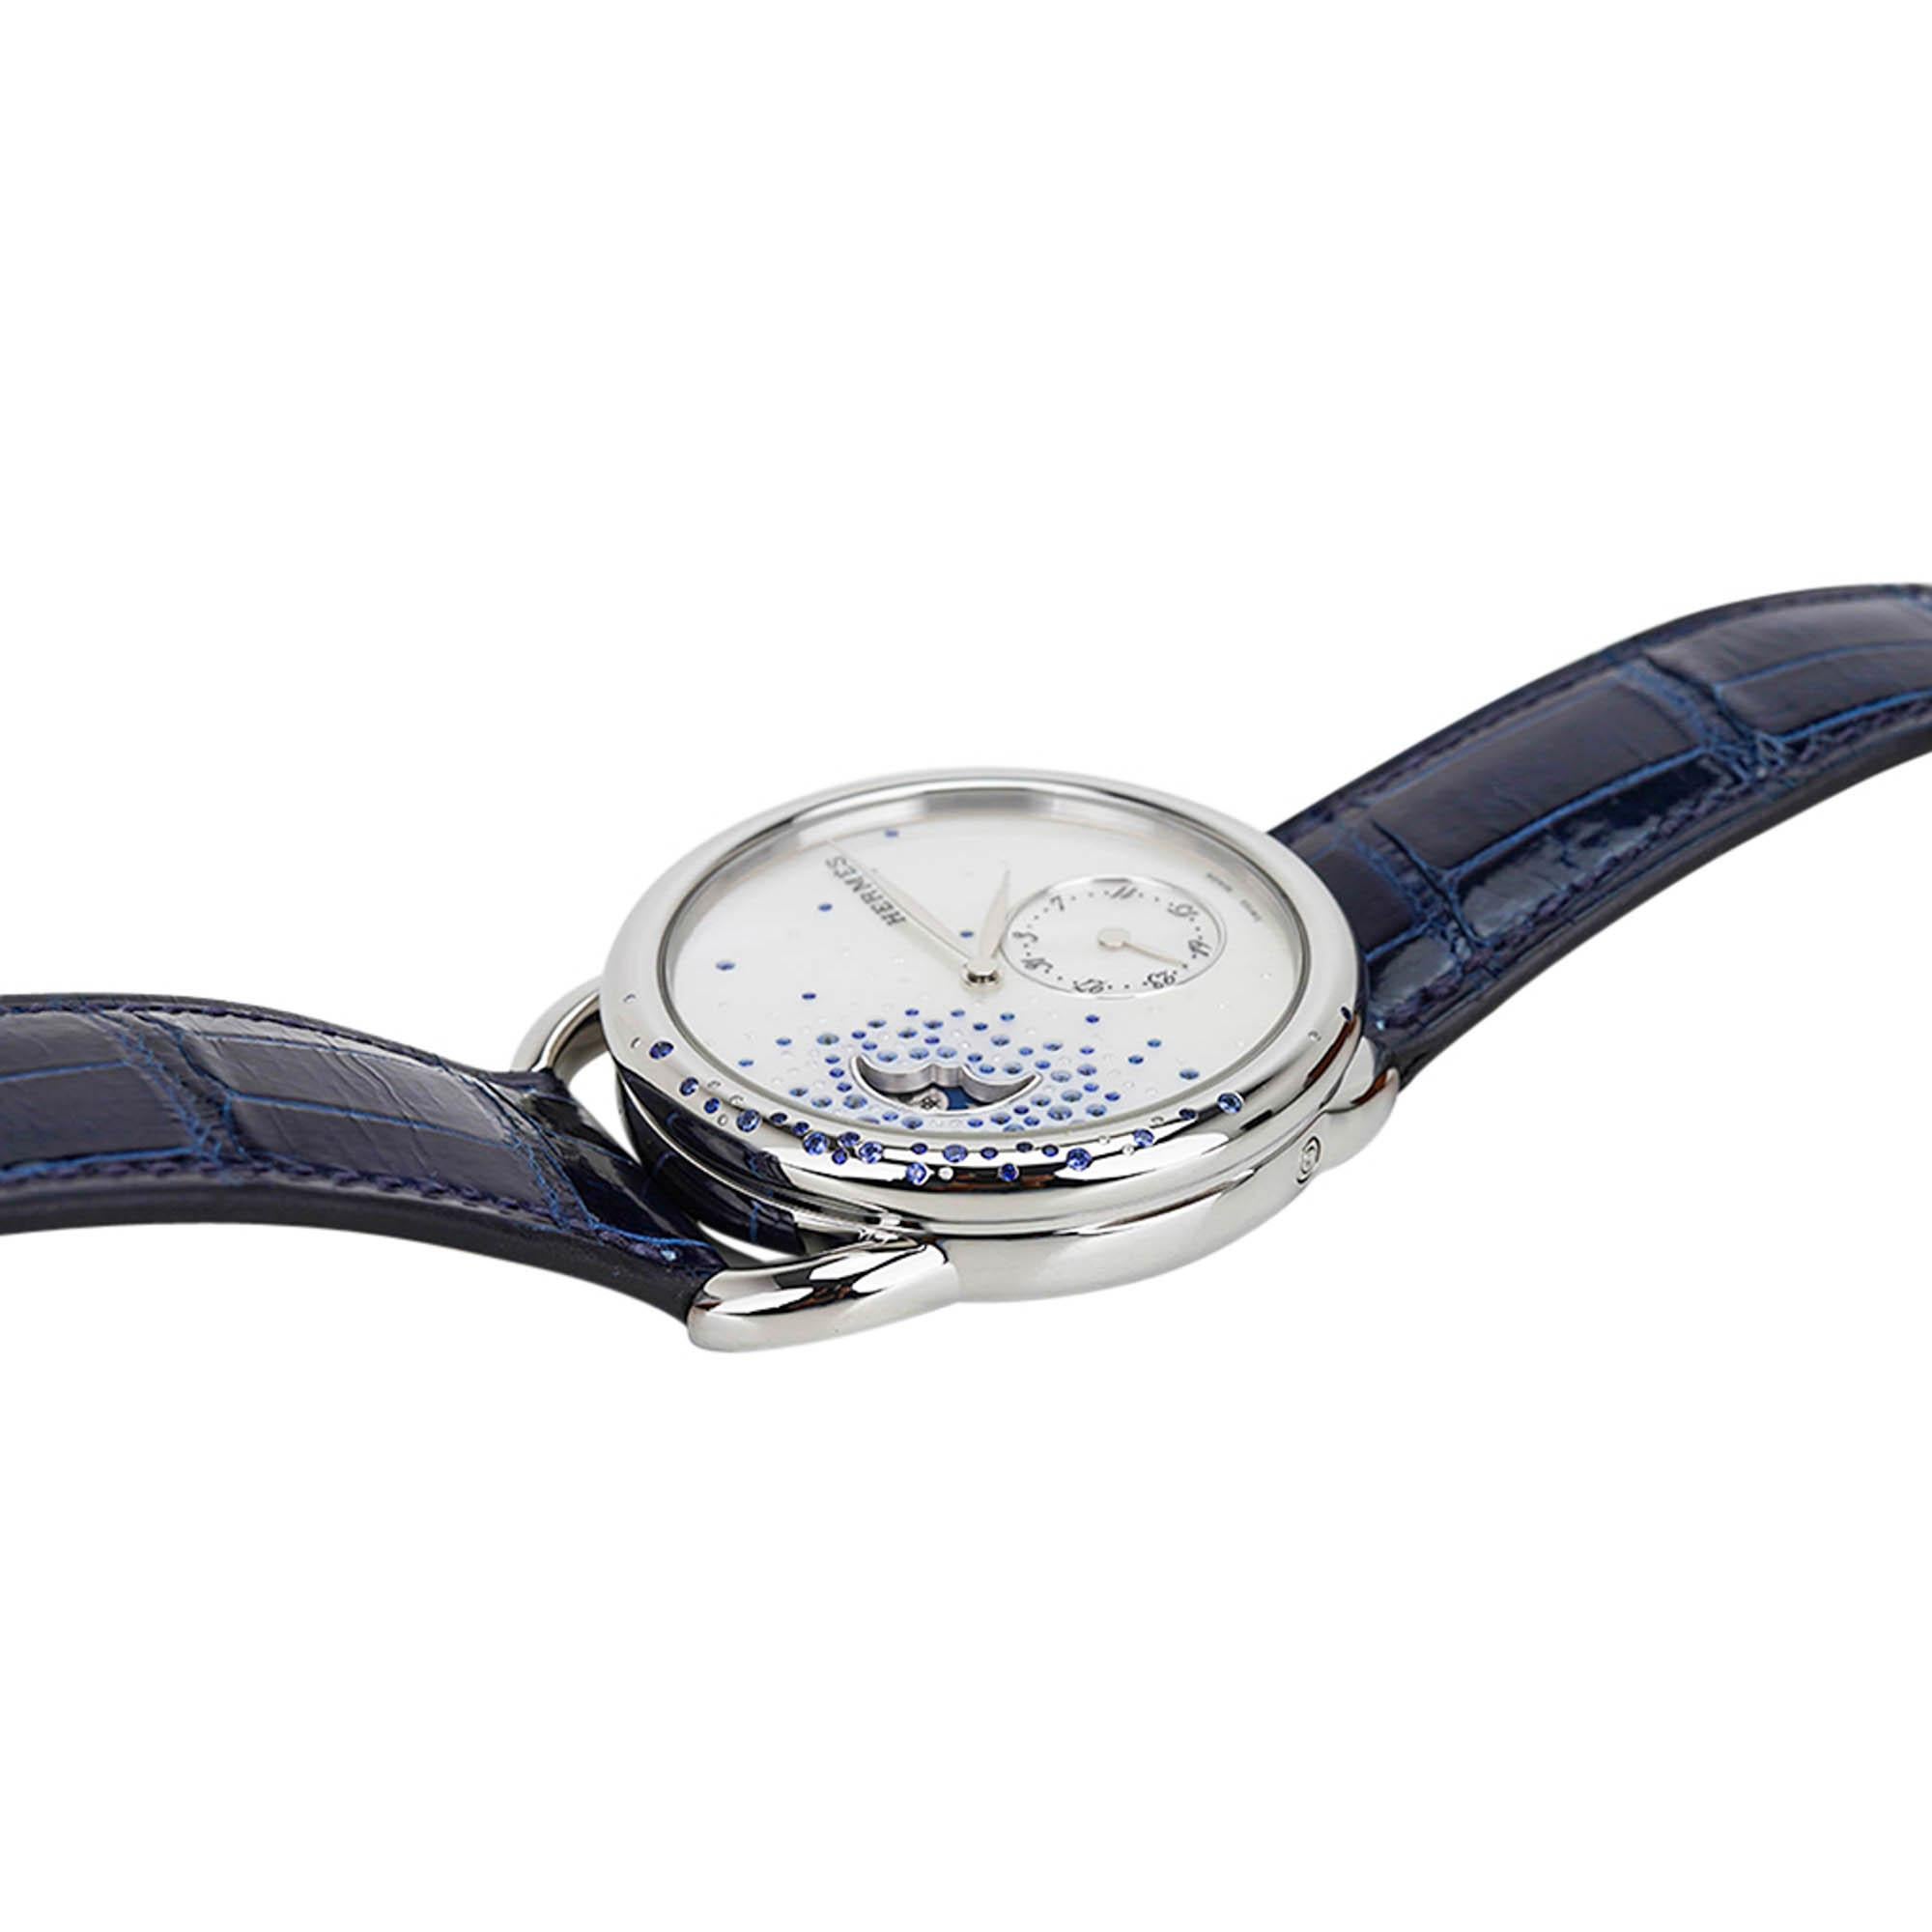 Hermes Uhr Arceau Petite Lune Großes Modell 38 mm Mondphase Saphire Diamanten im Angebot 2